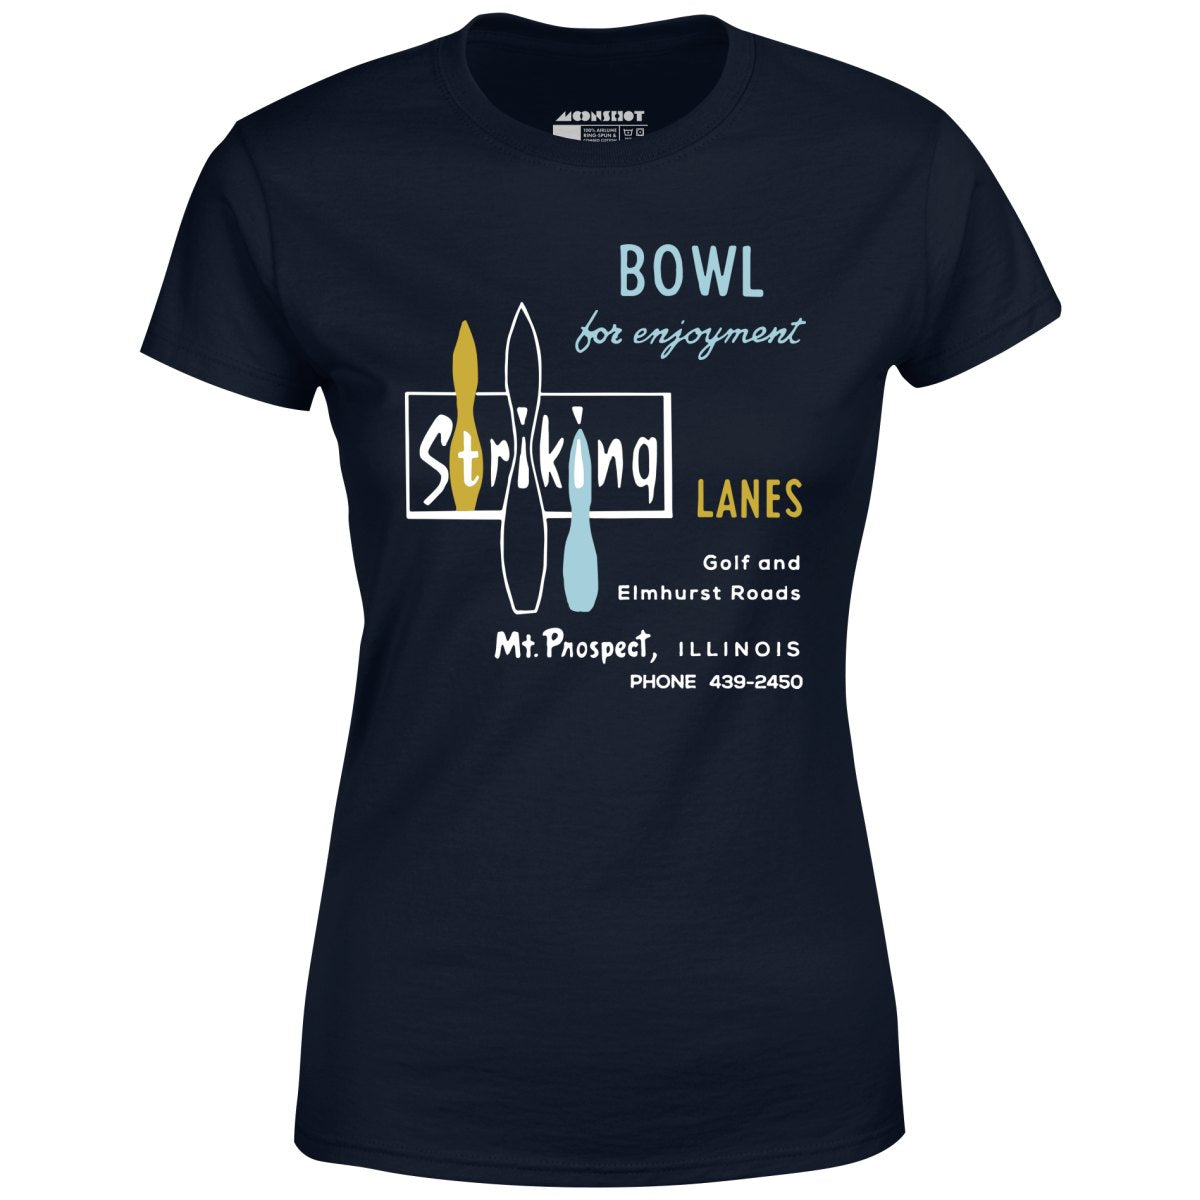 Striking Lanes - Mt. Prospect, IL - Vintage Bowling Alley - Women's T-Shirt